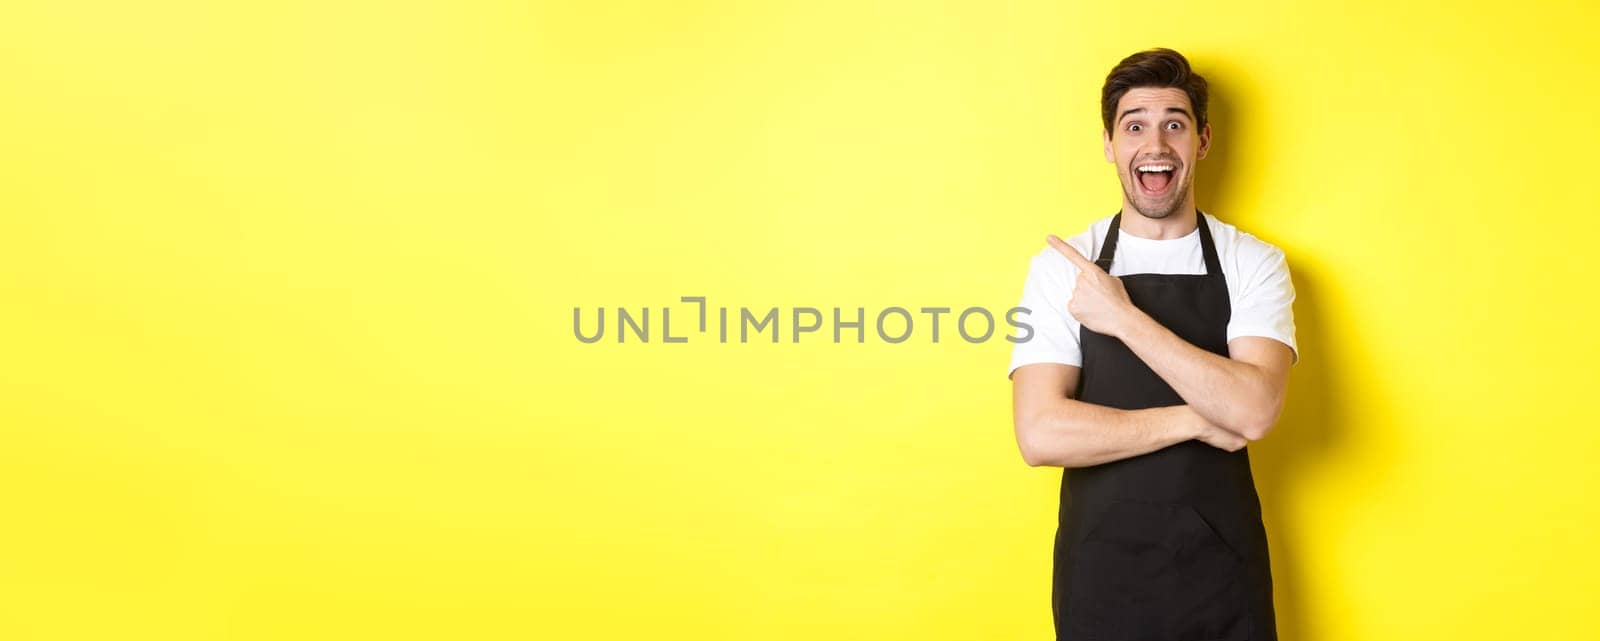 Surprised salesman in black apron pointing finger upper left corner, showing shop promo offer, standing against yellow background.